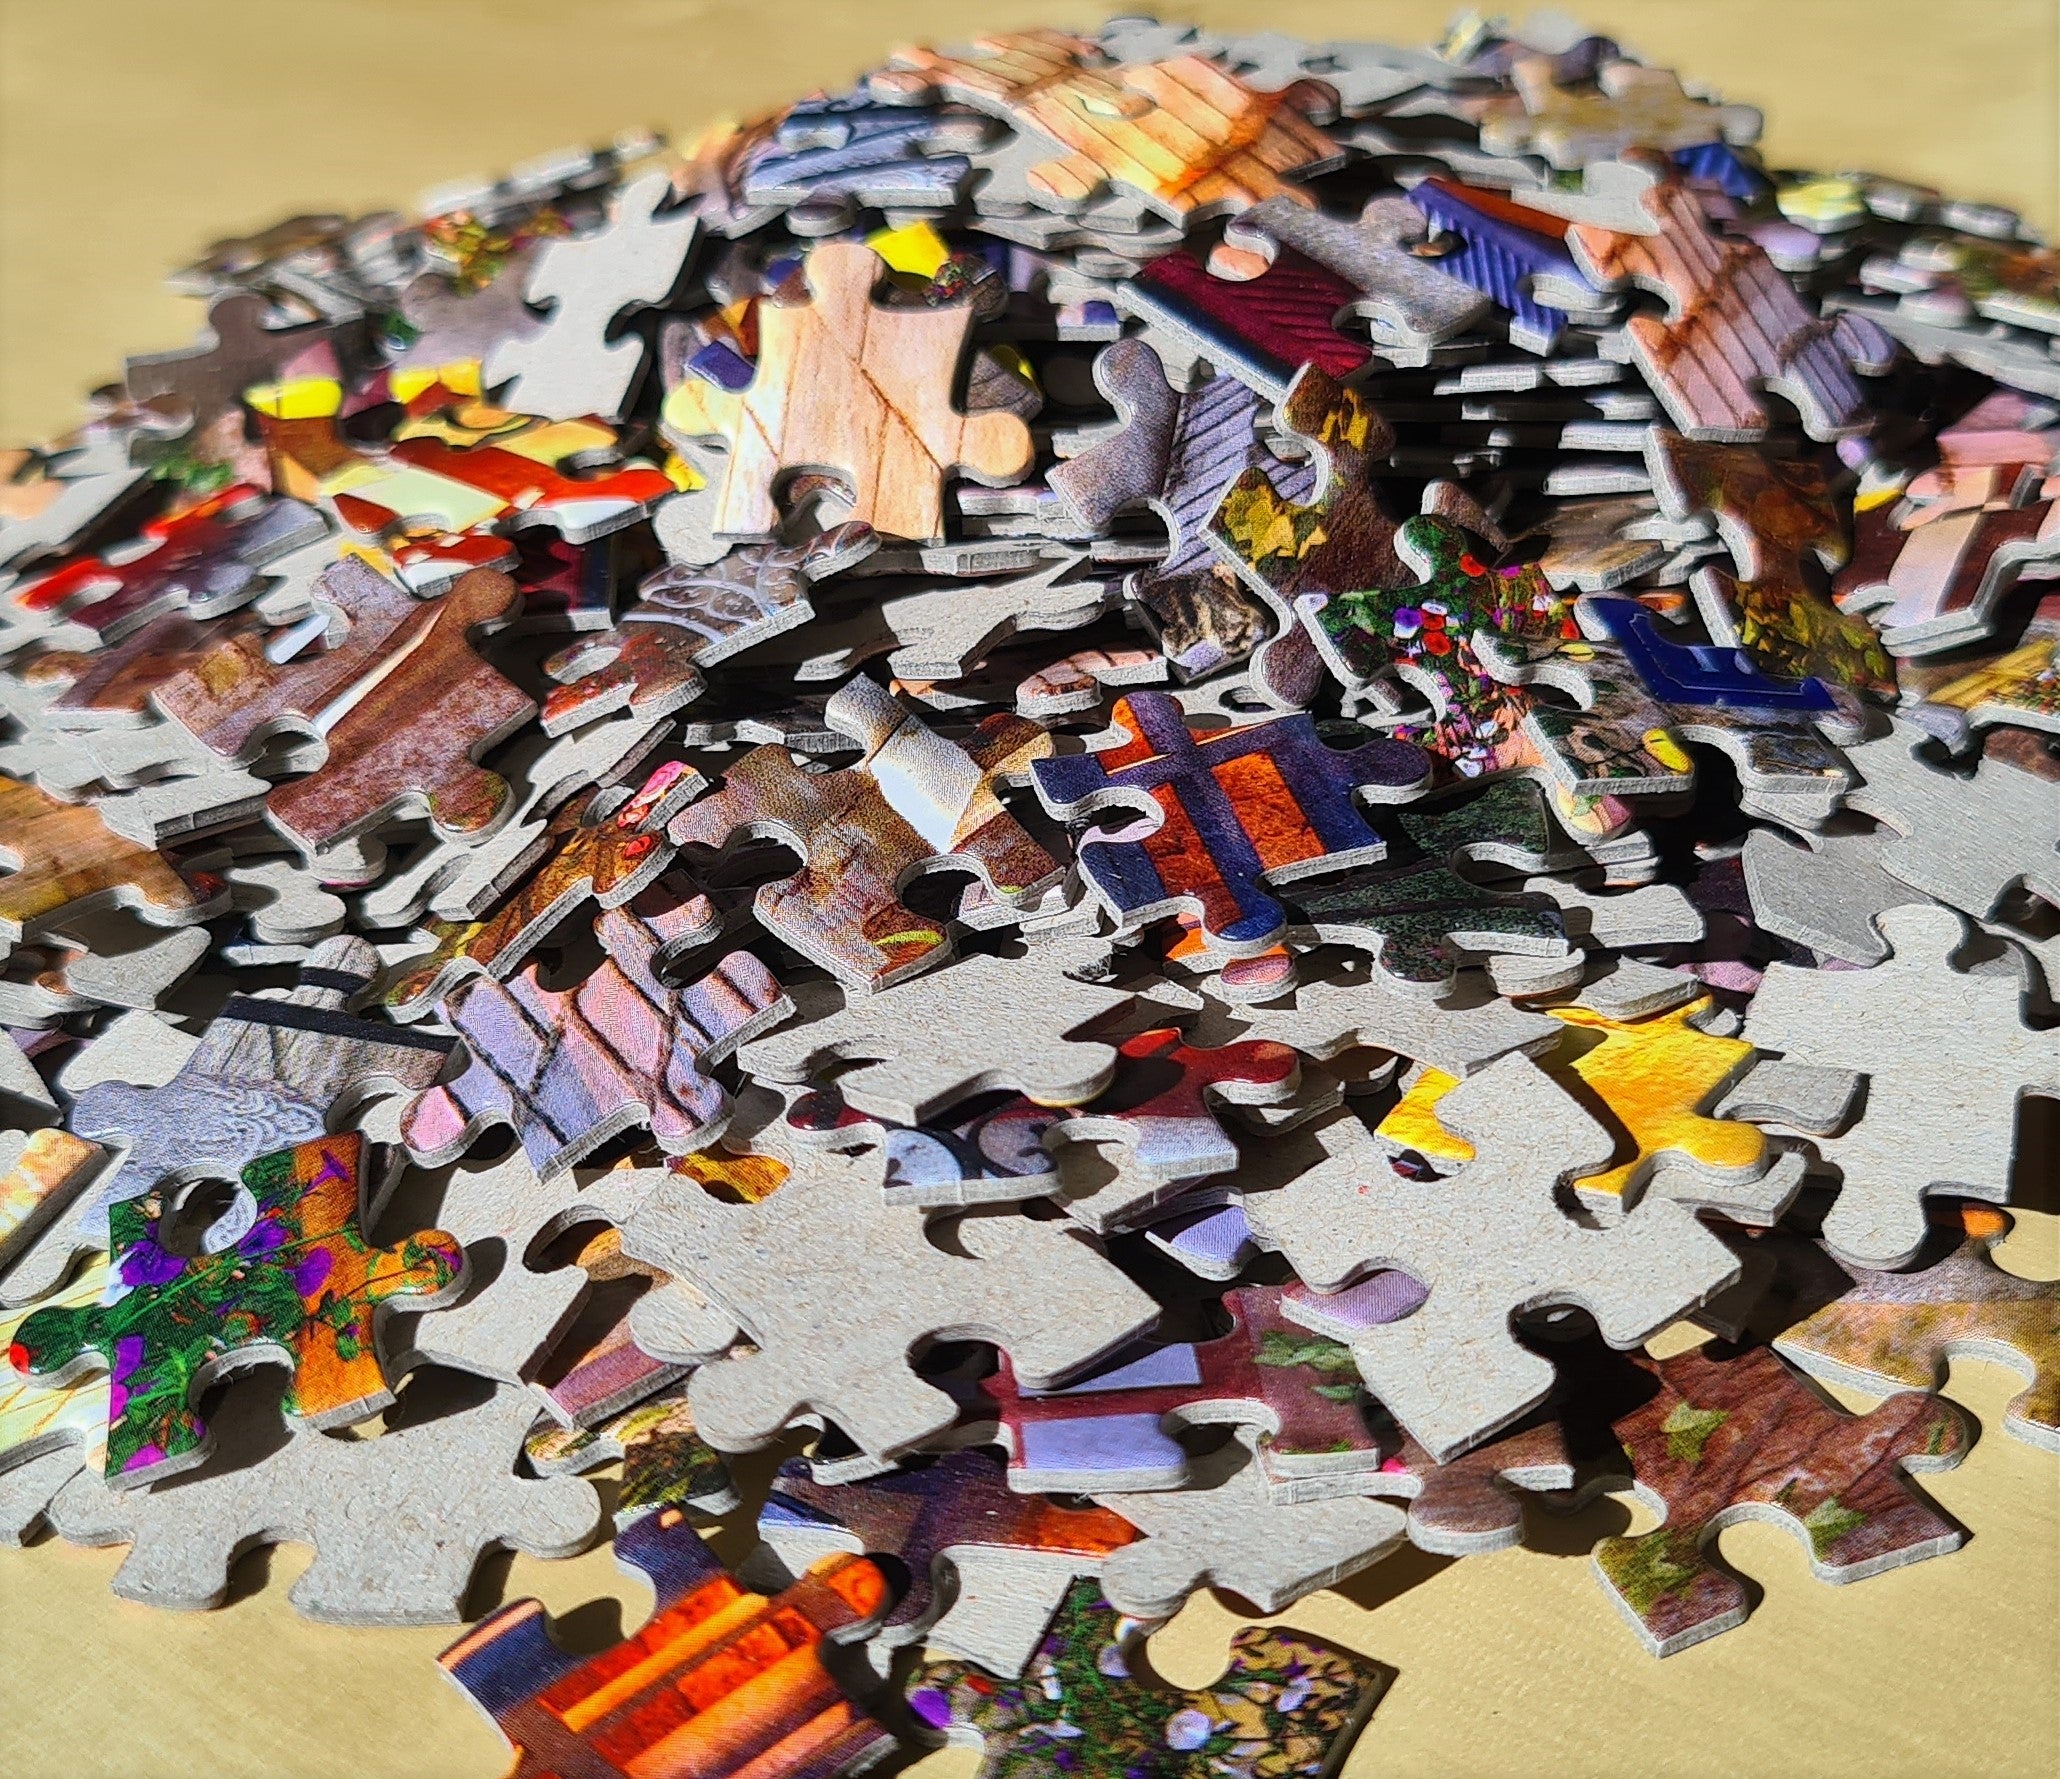 CASTORLAND 3000 Piece Jigsaw Puzzles, Garden of Dreams, Idyllic paradise, Colorful puzzles, Adult Puzzle, Castor